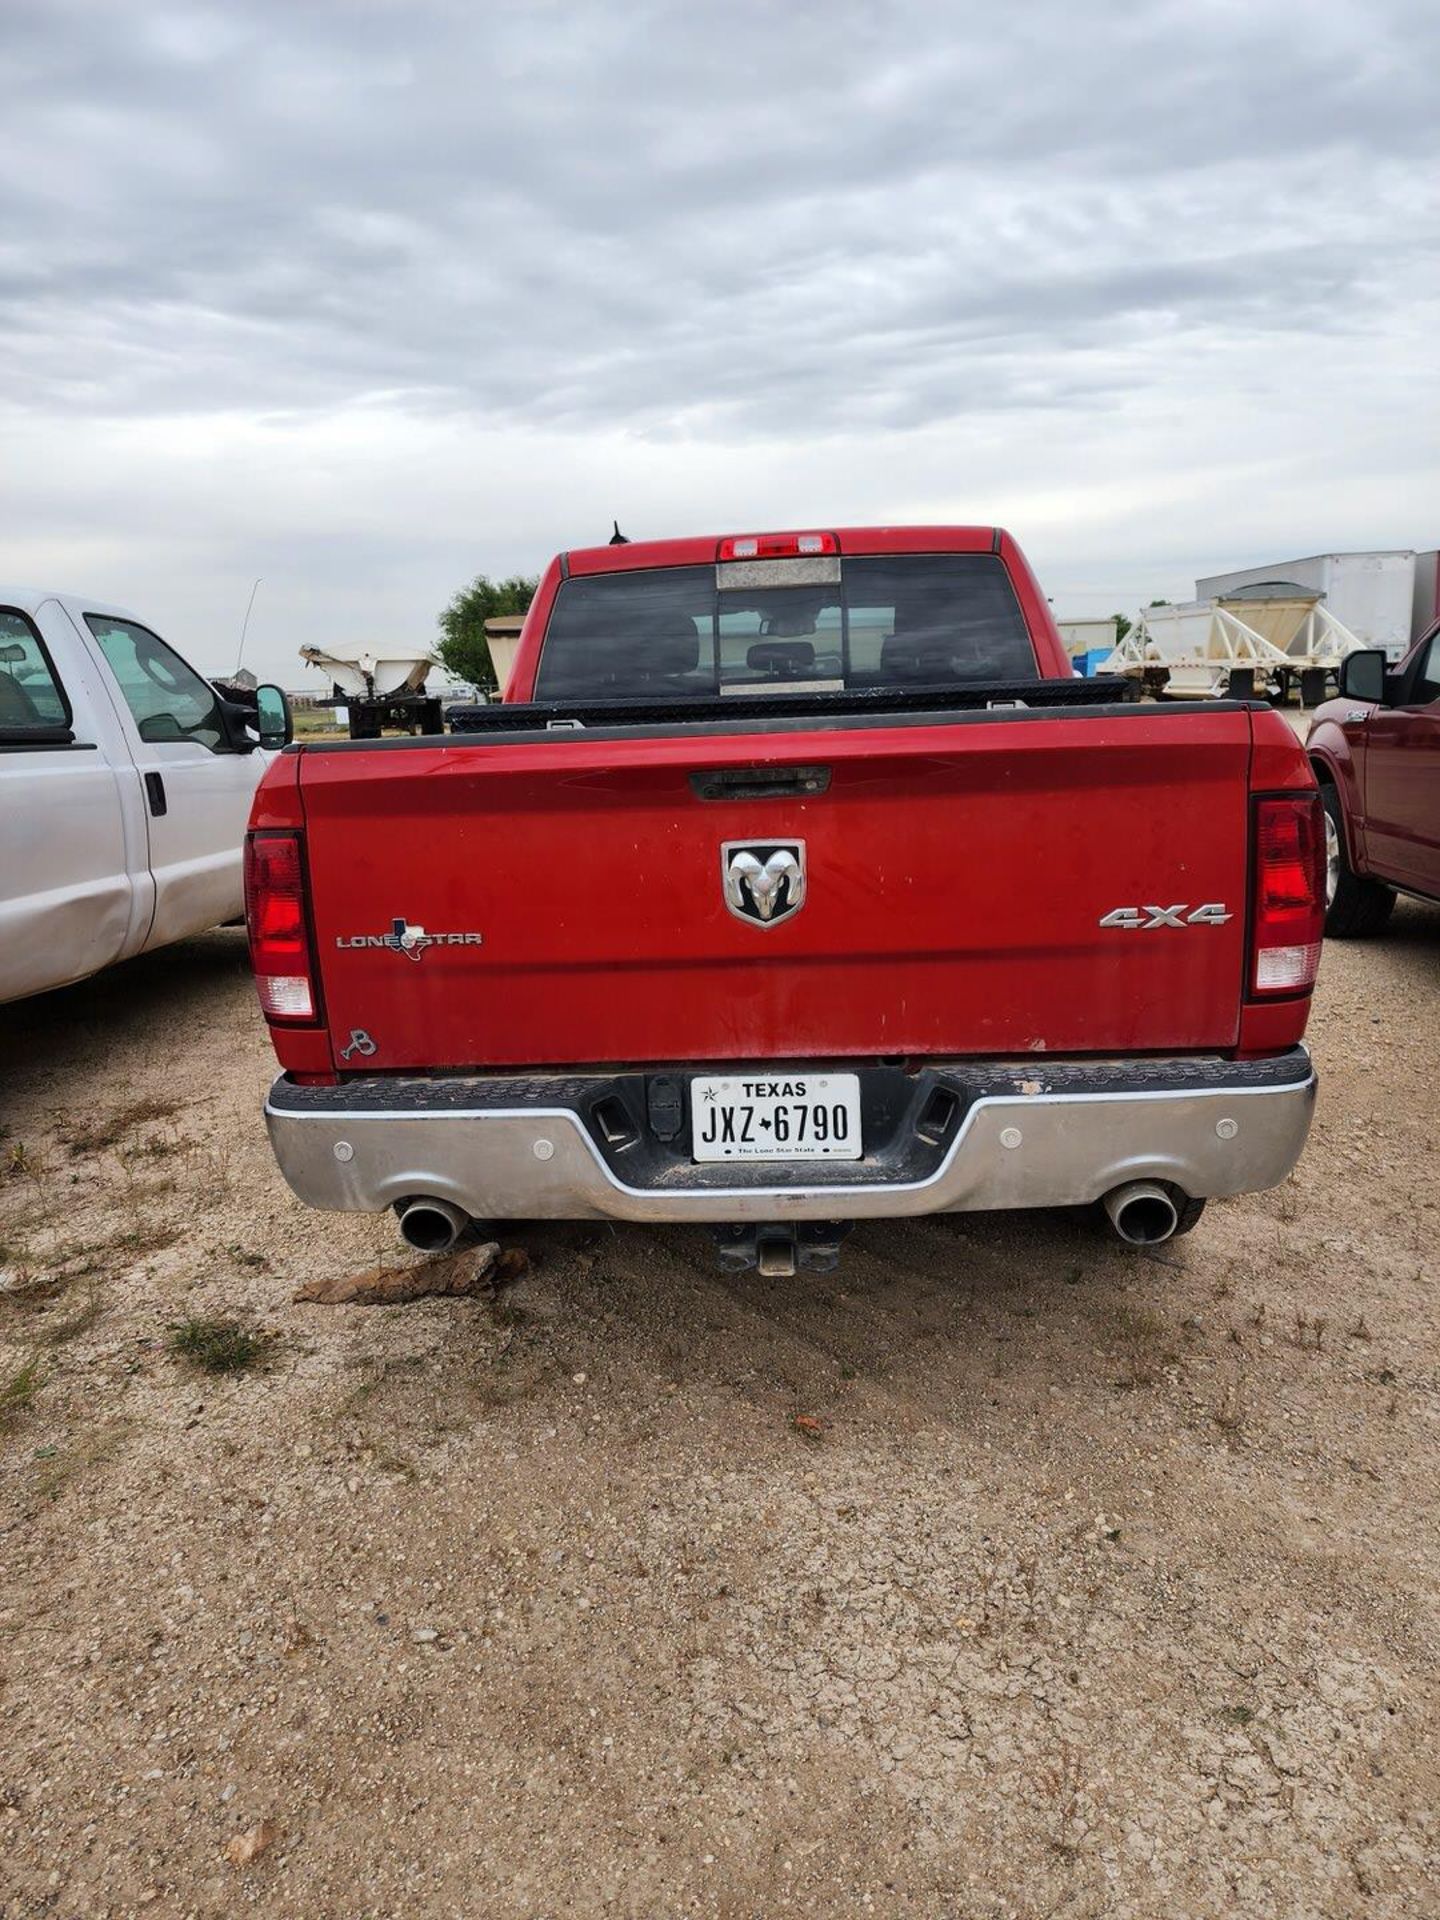 2017 Dodge Ram 1500 Hemi Truck (Gasoline) Mileage: 89,578 ; Vin: 1C6RR7T2HS719480; TX Plate: JXZ- - Image 7 of 19